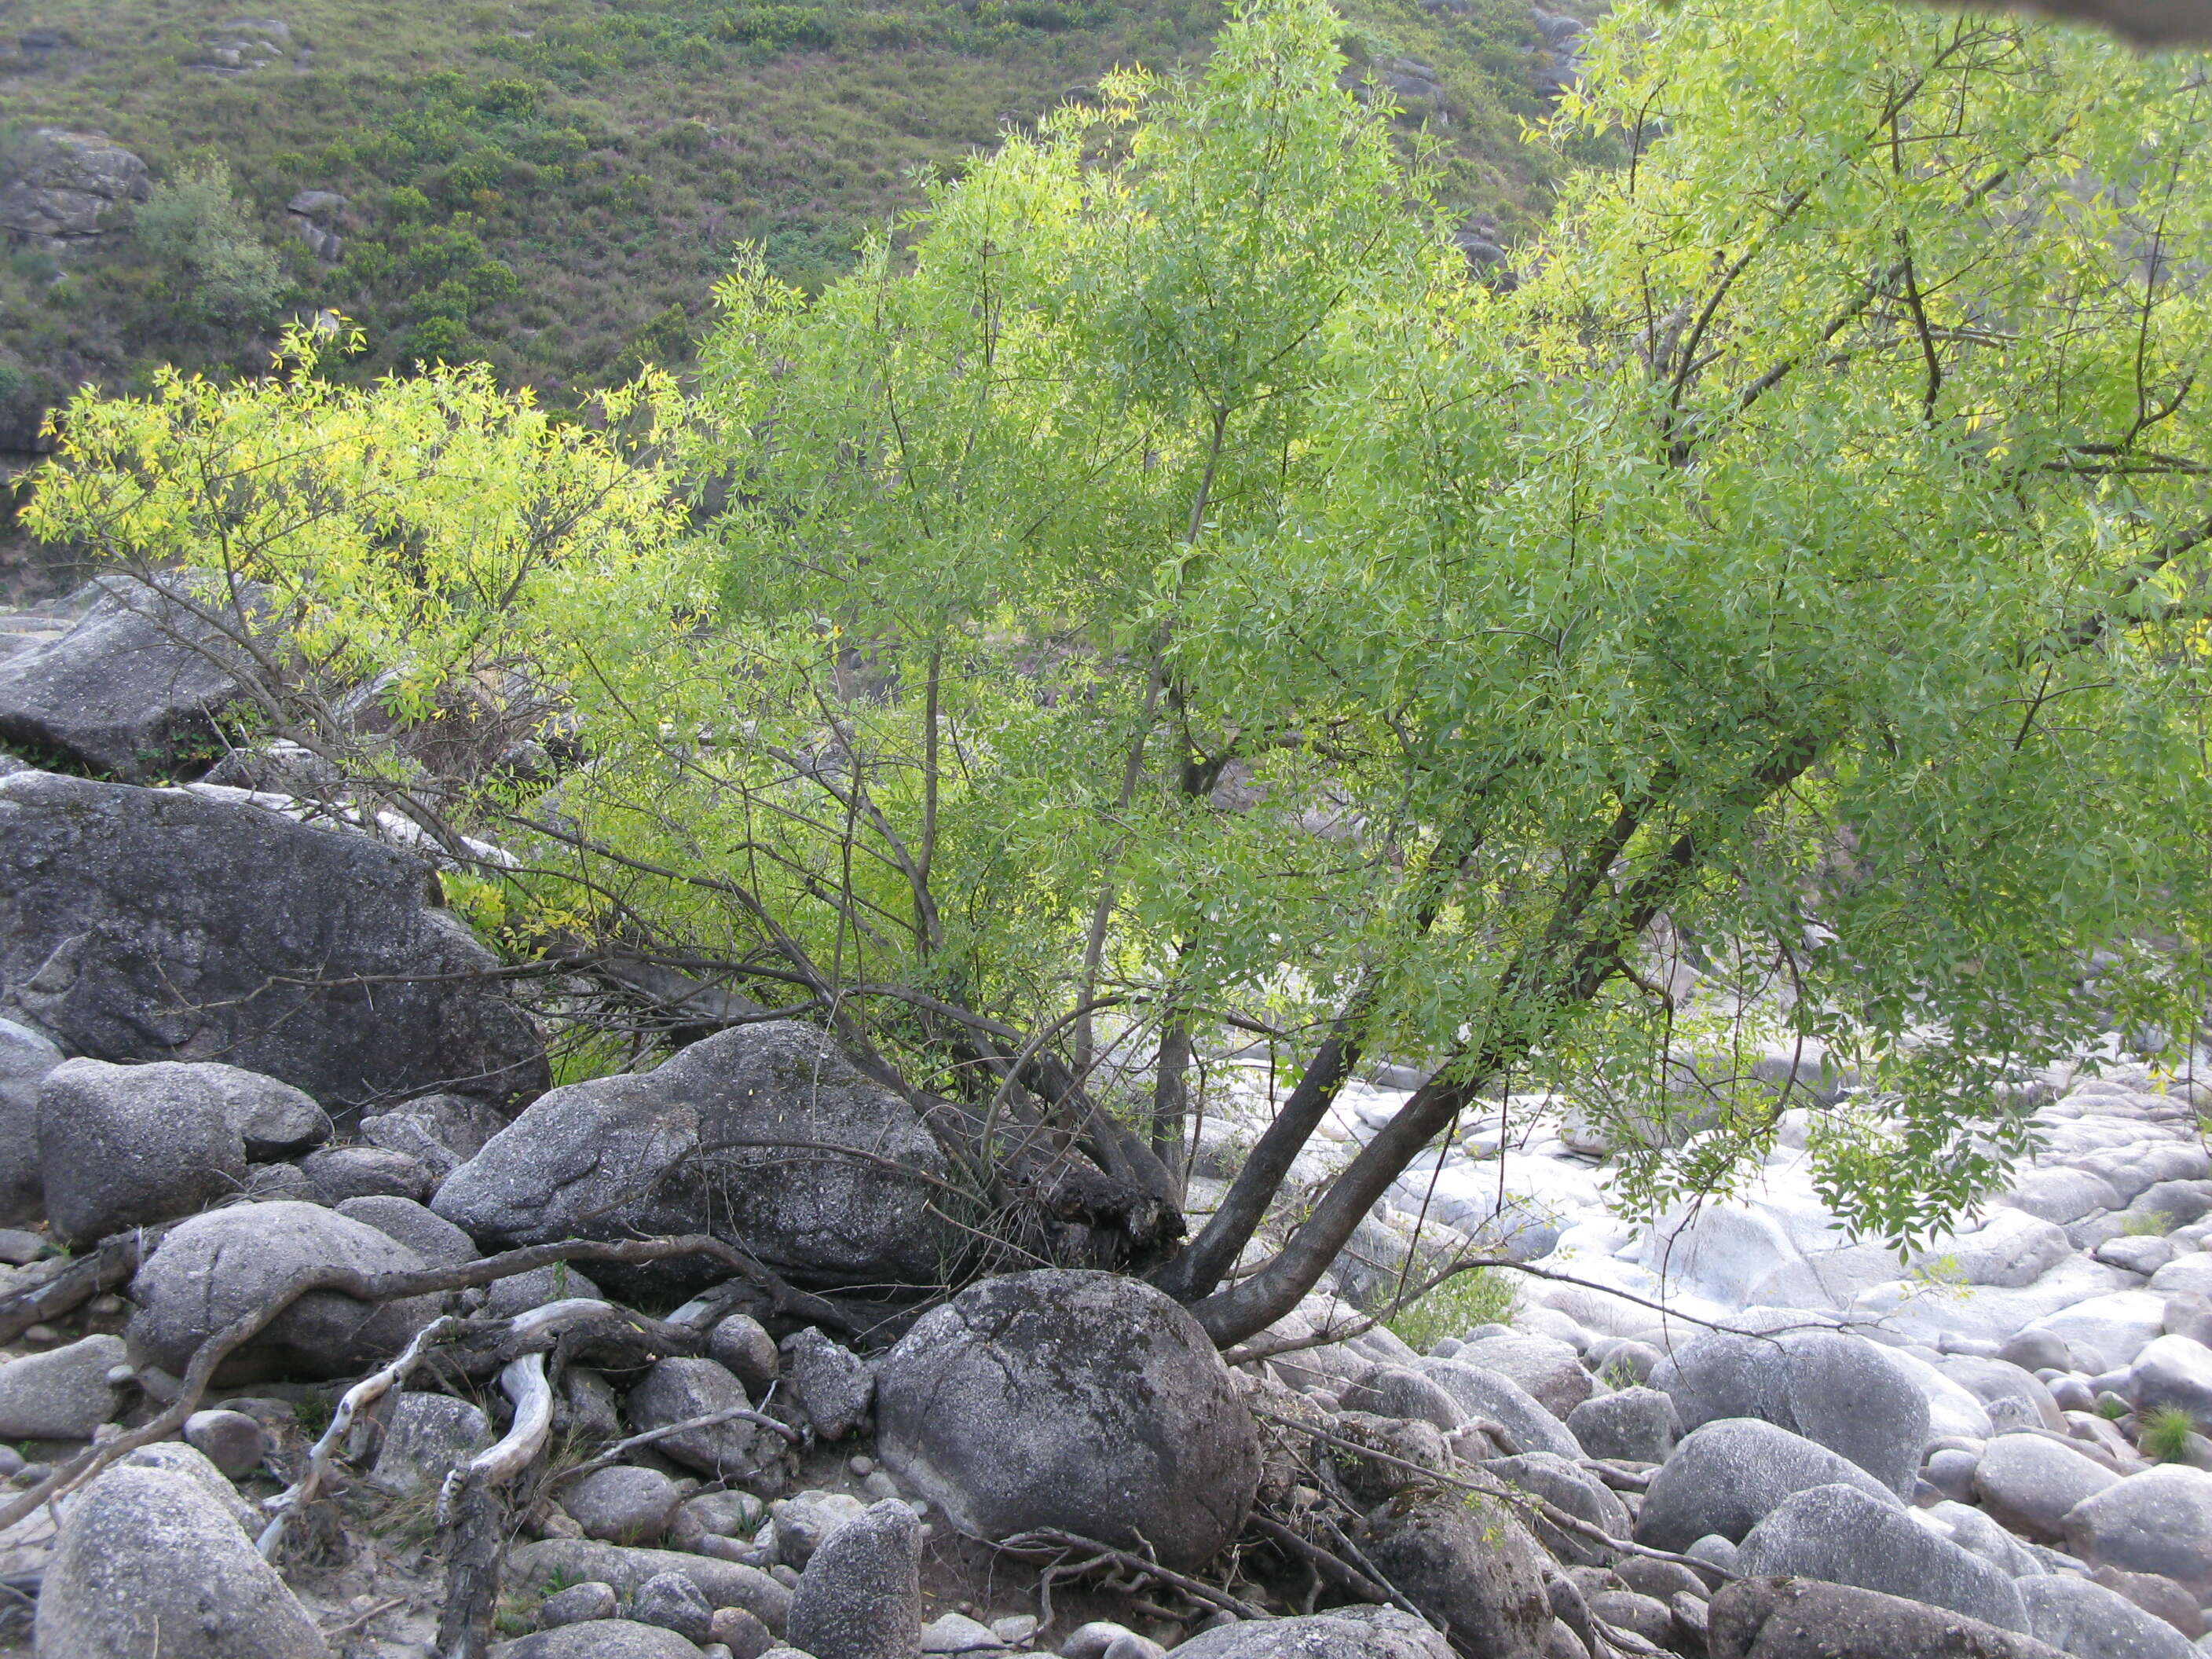 Image of Narrow-leafed Ash